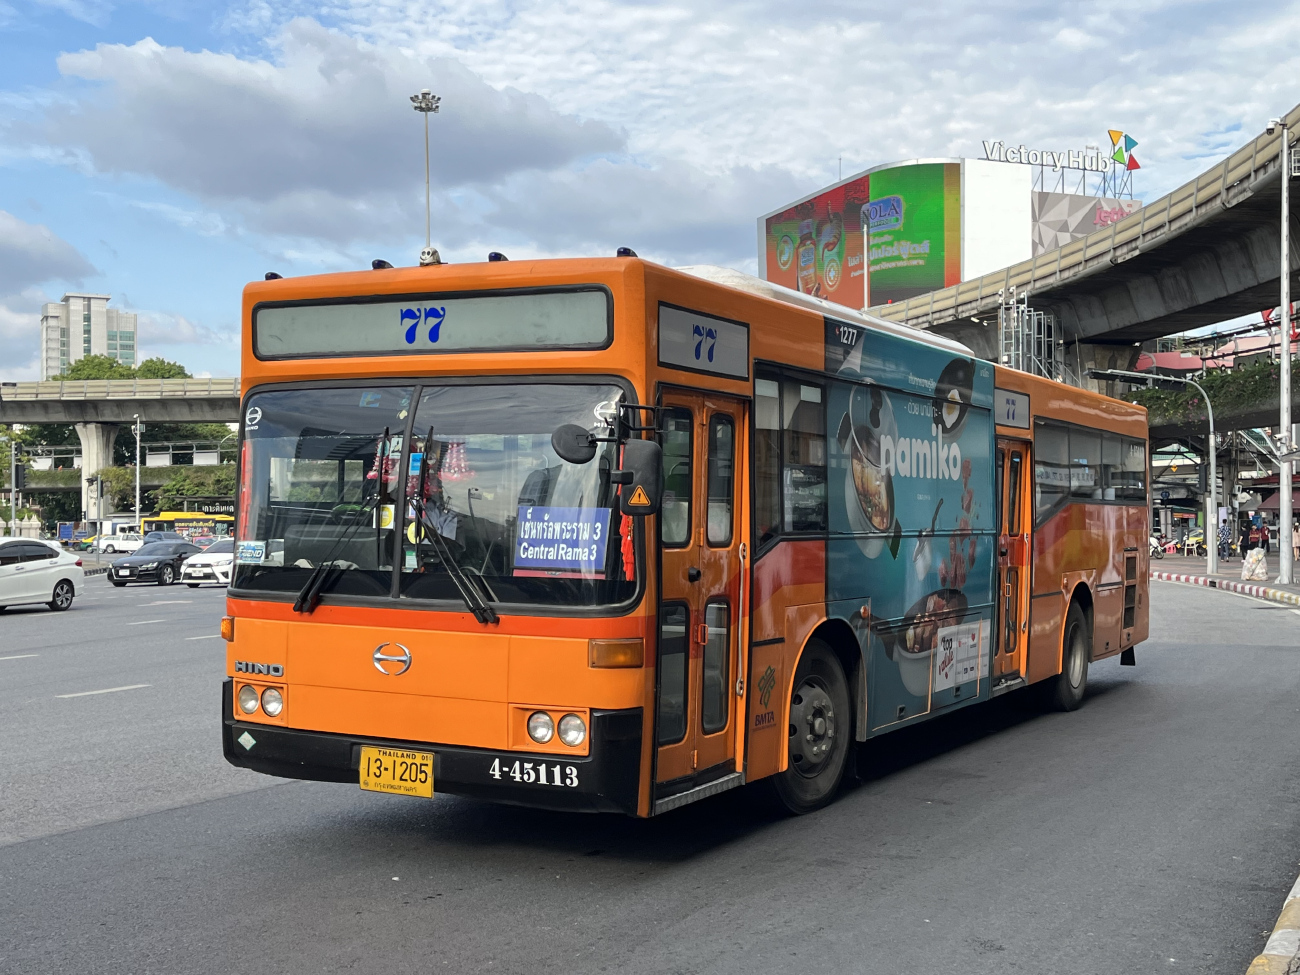 Bangkok, Thonburi Bus Body No. 4-45113